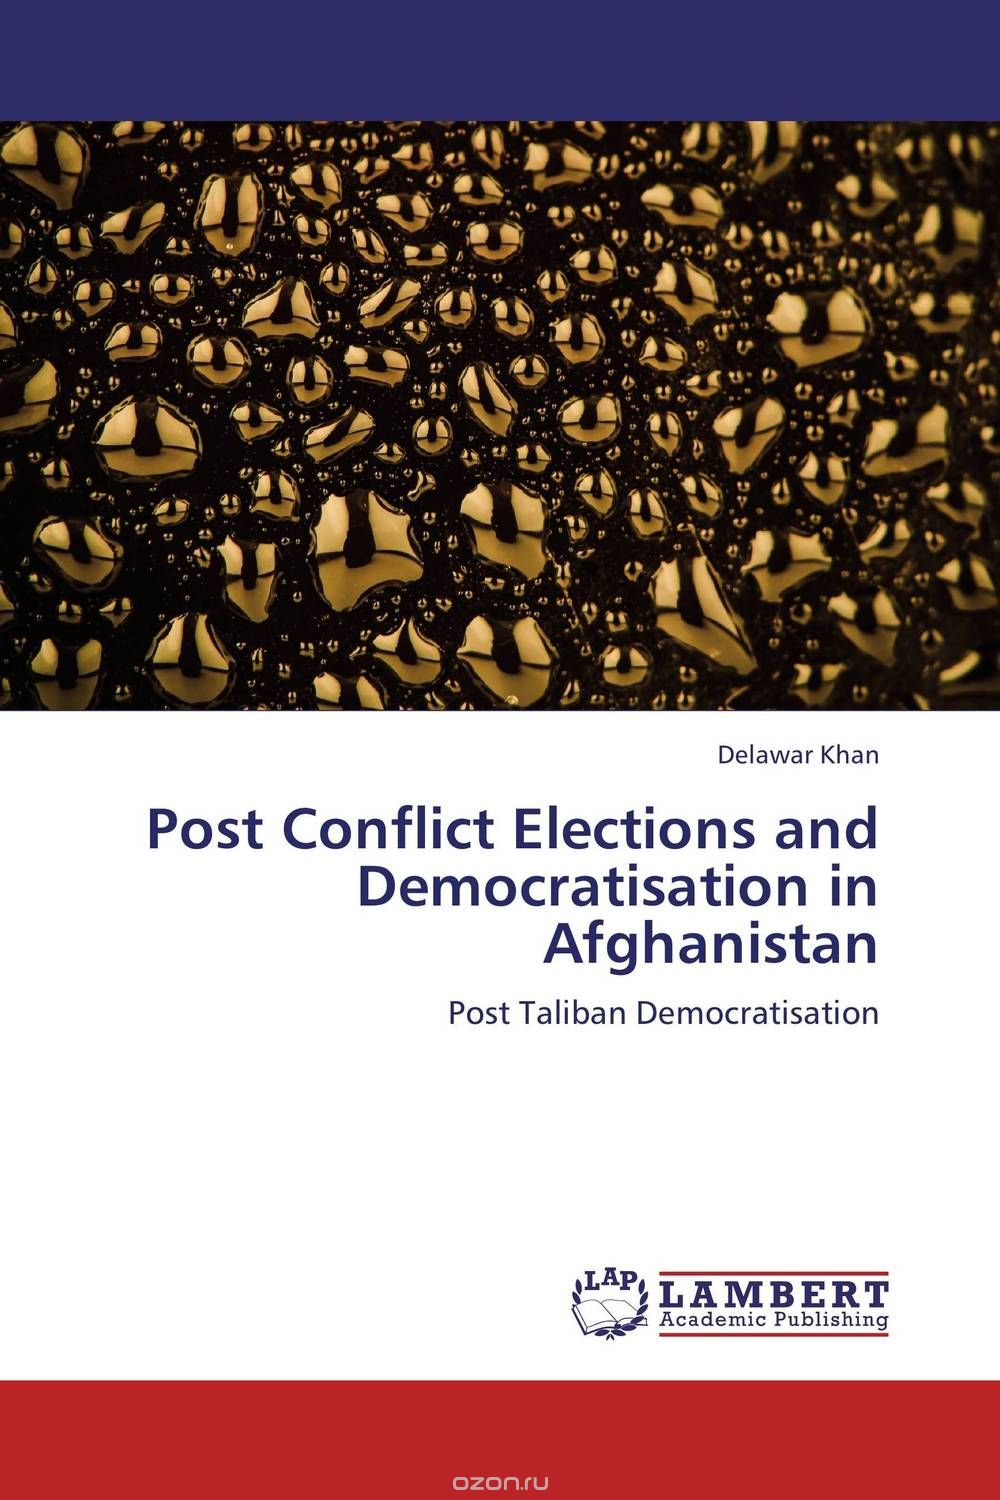 Скачать книгу "Post Conflict Elections and Democratisation in Afghanistan"